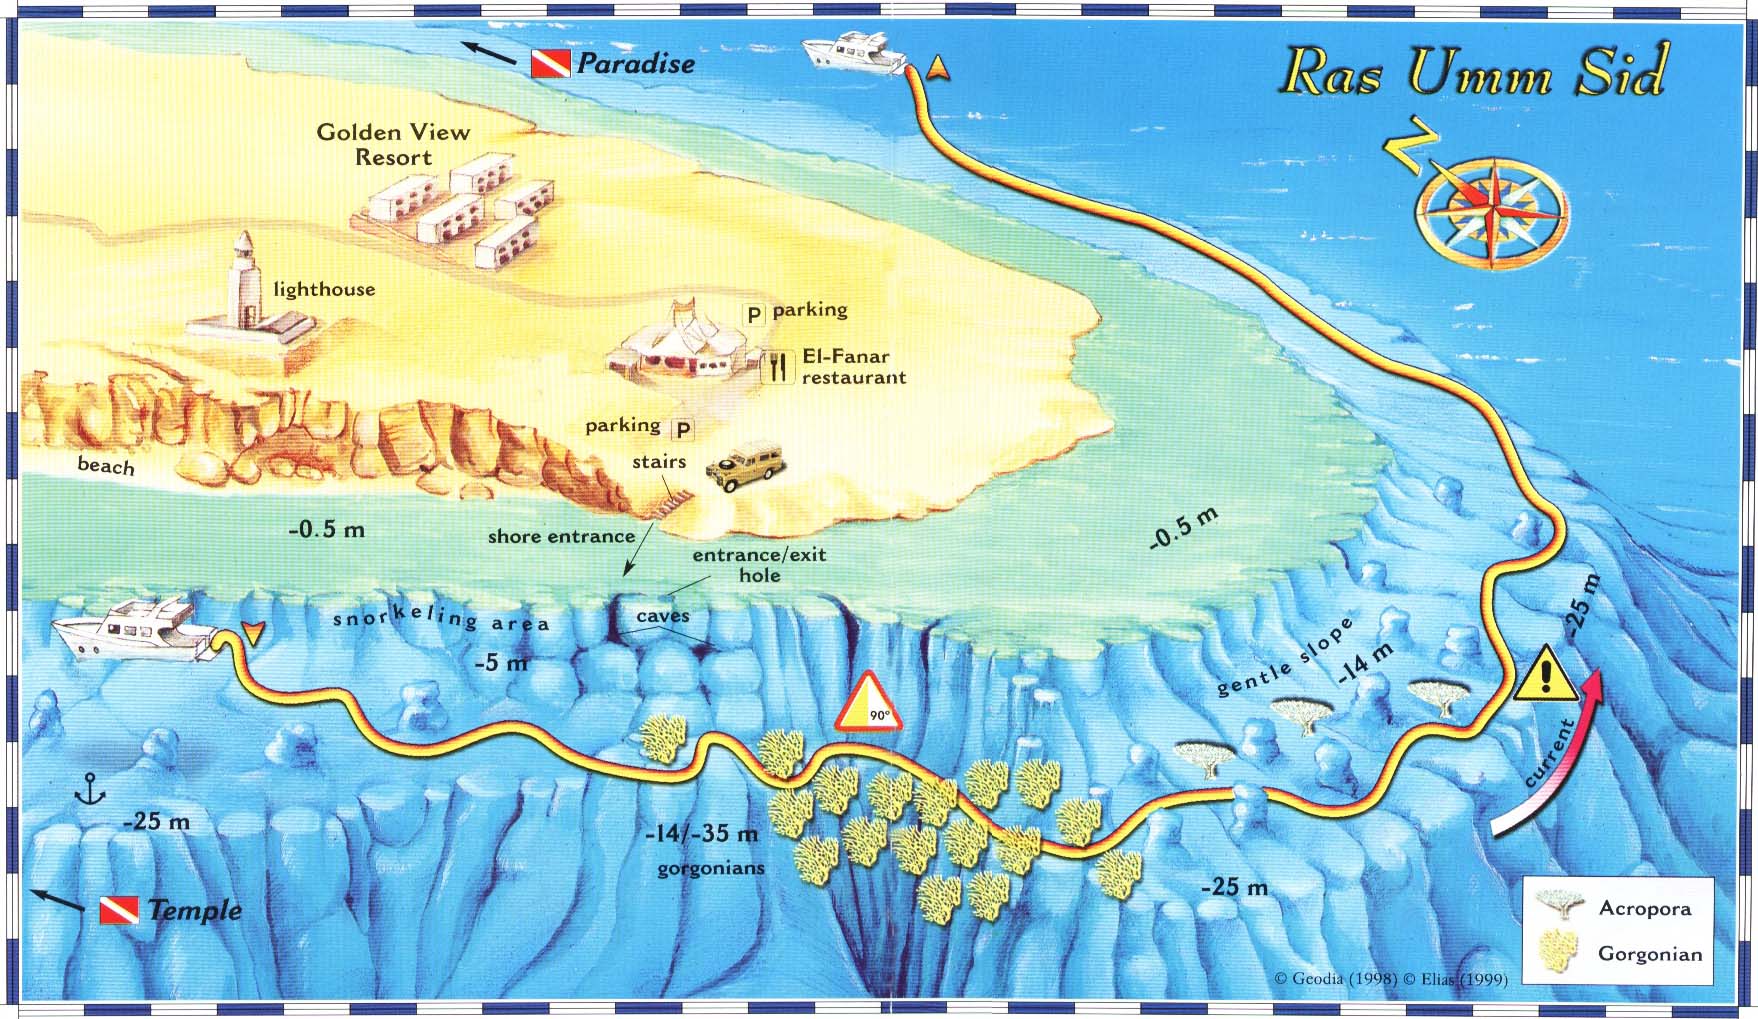 Ras Umm Sidd Diving Site Map